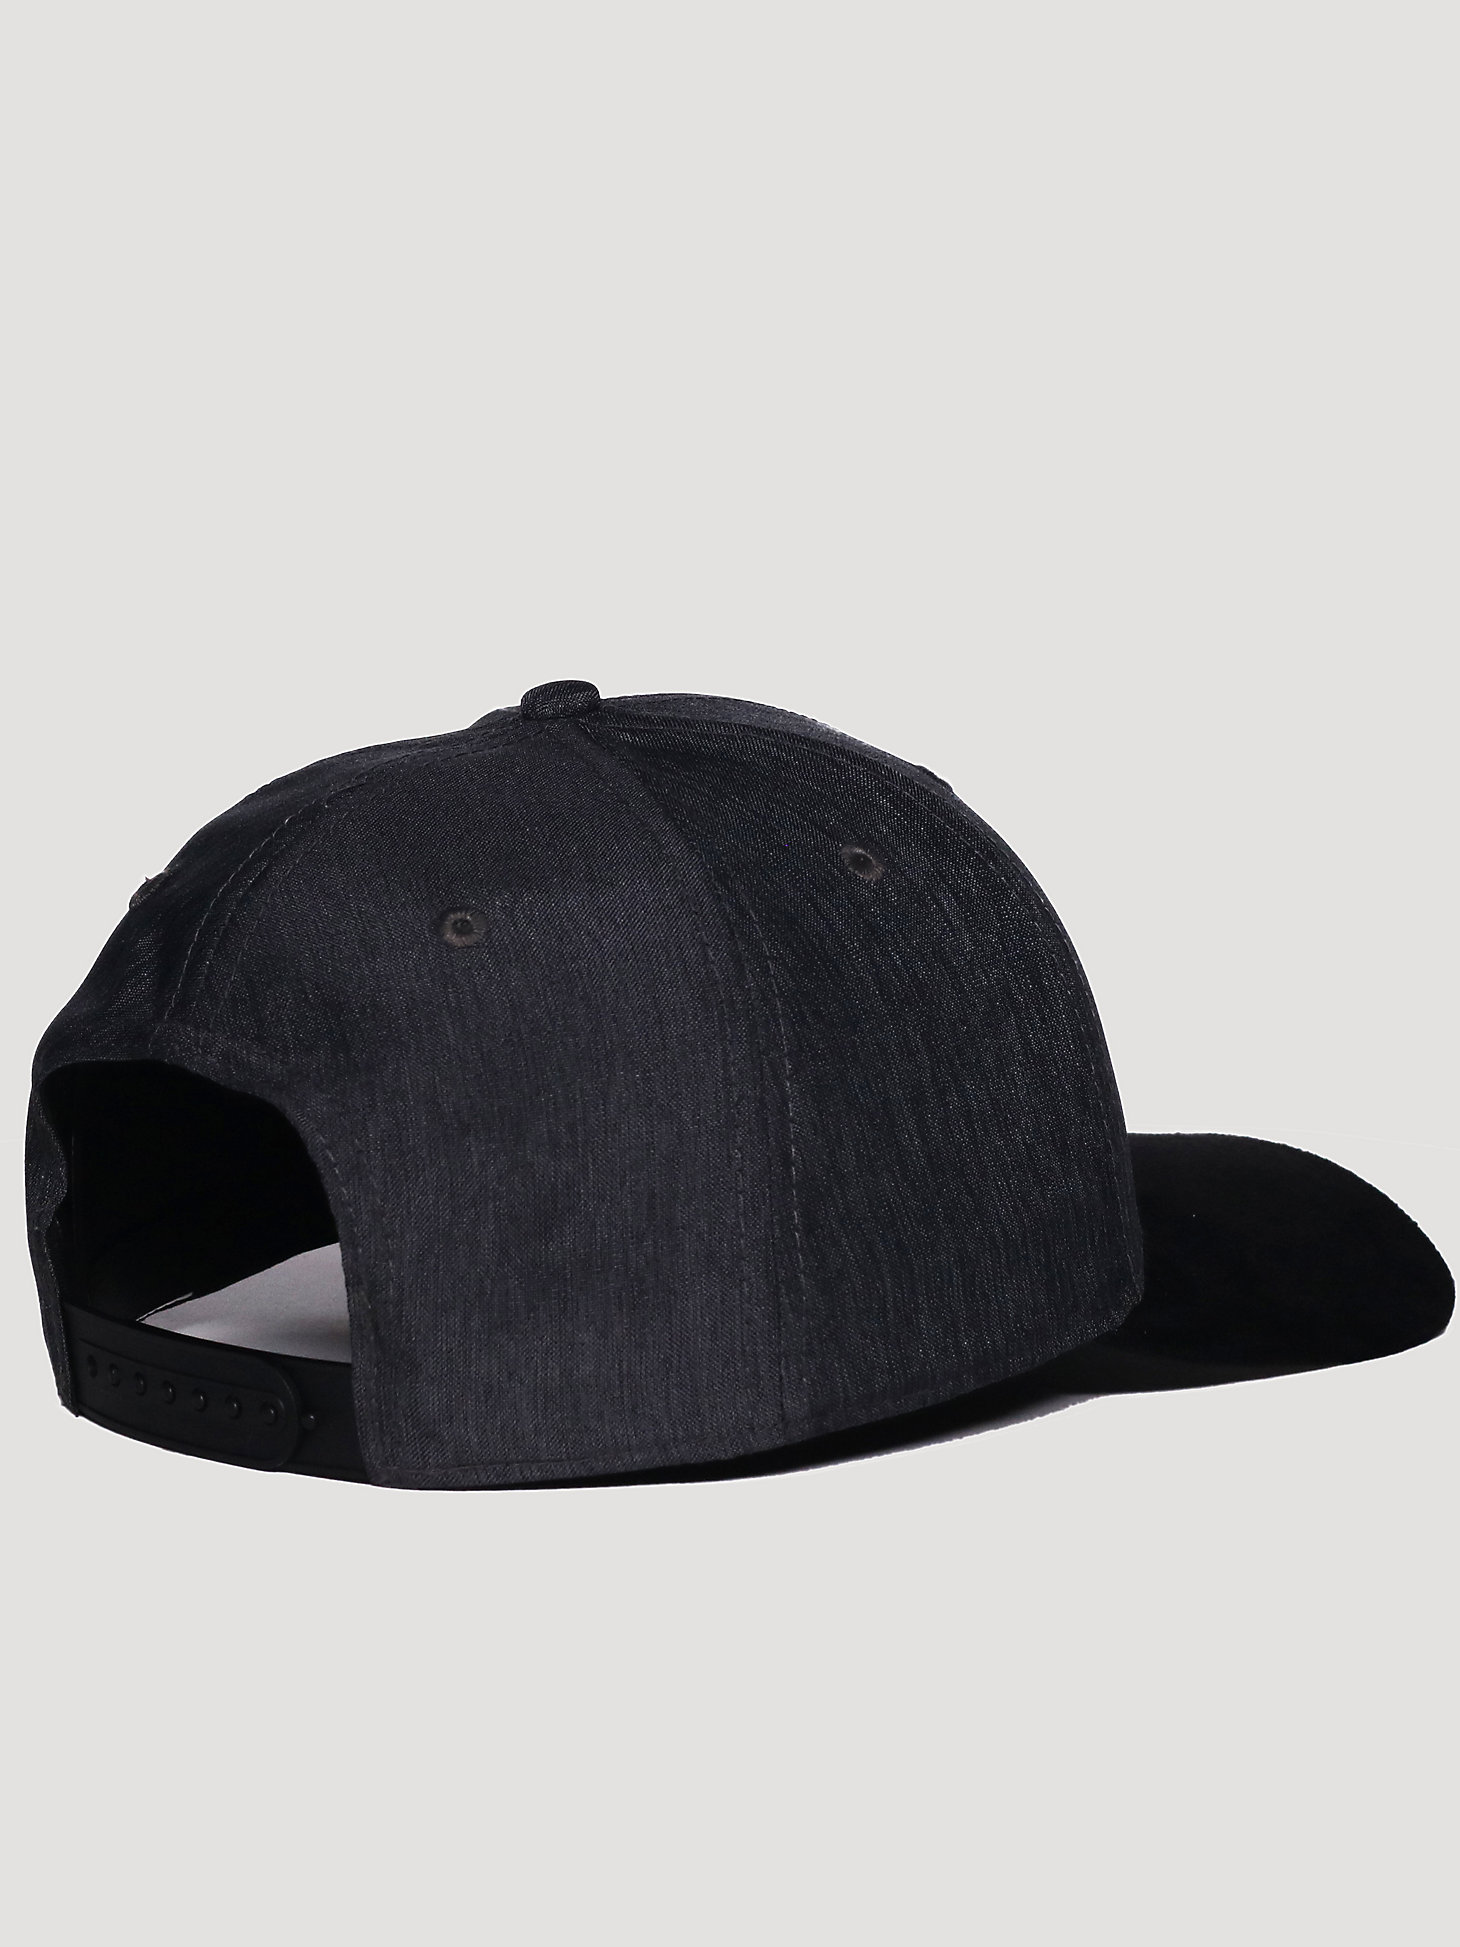 Mens Est. 1947 Wrangler Hat:Charcoal Heather:ONE SIZE alternative view 6